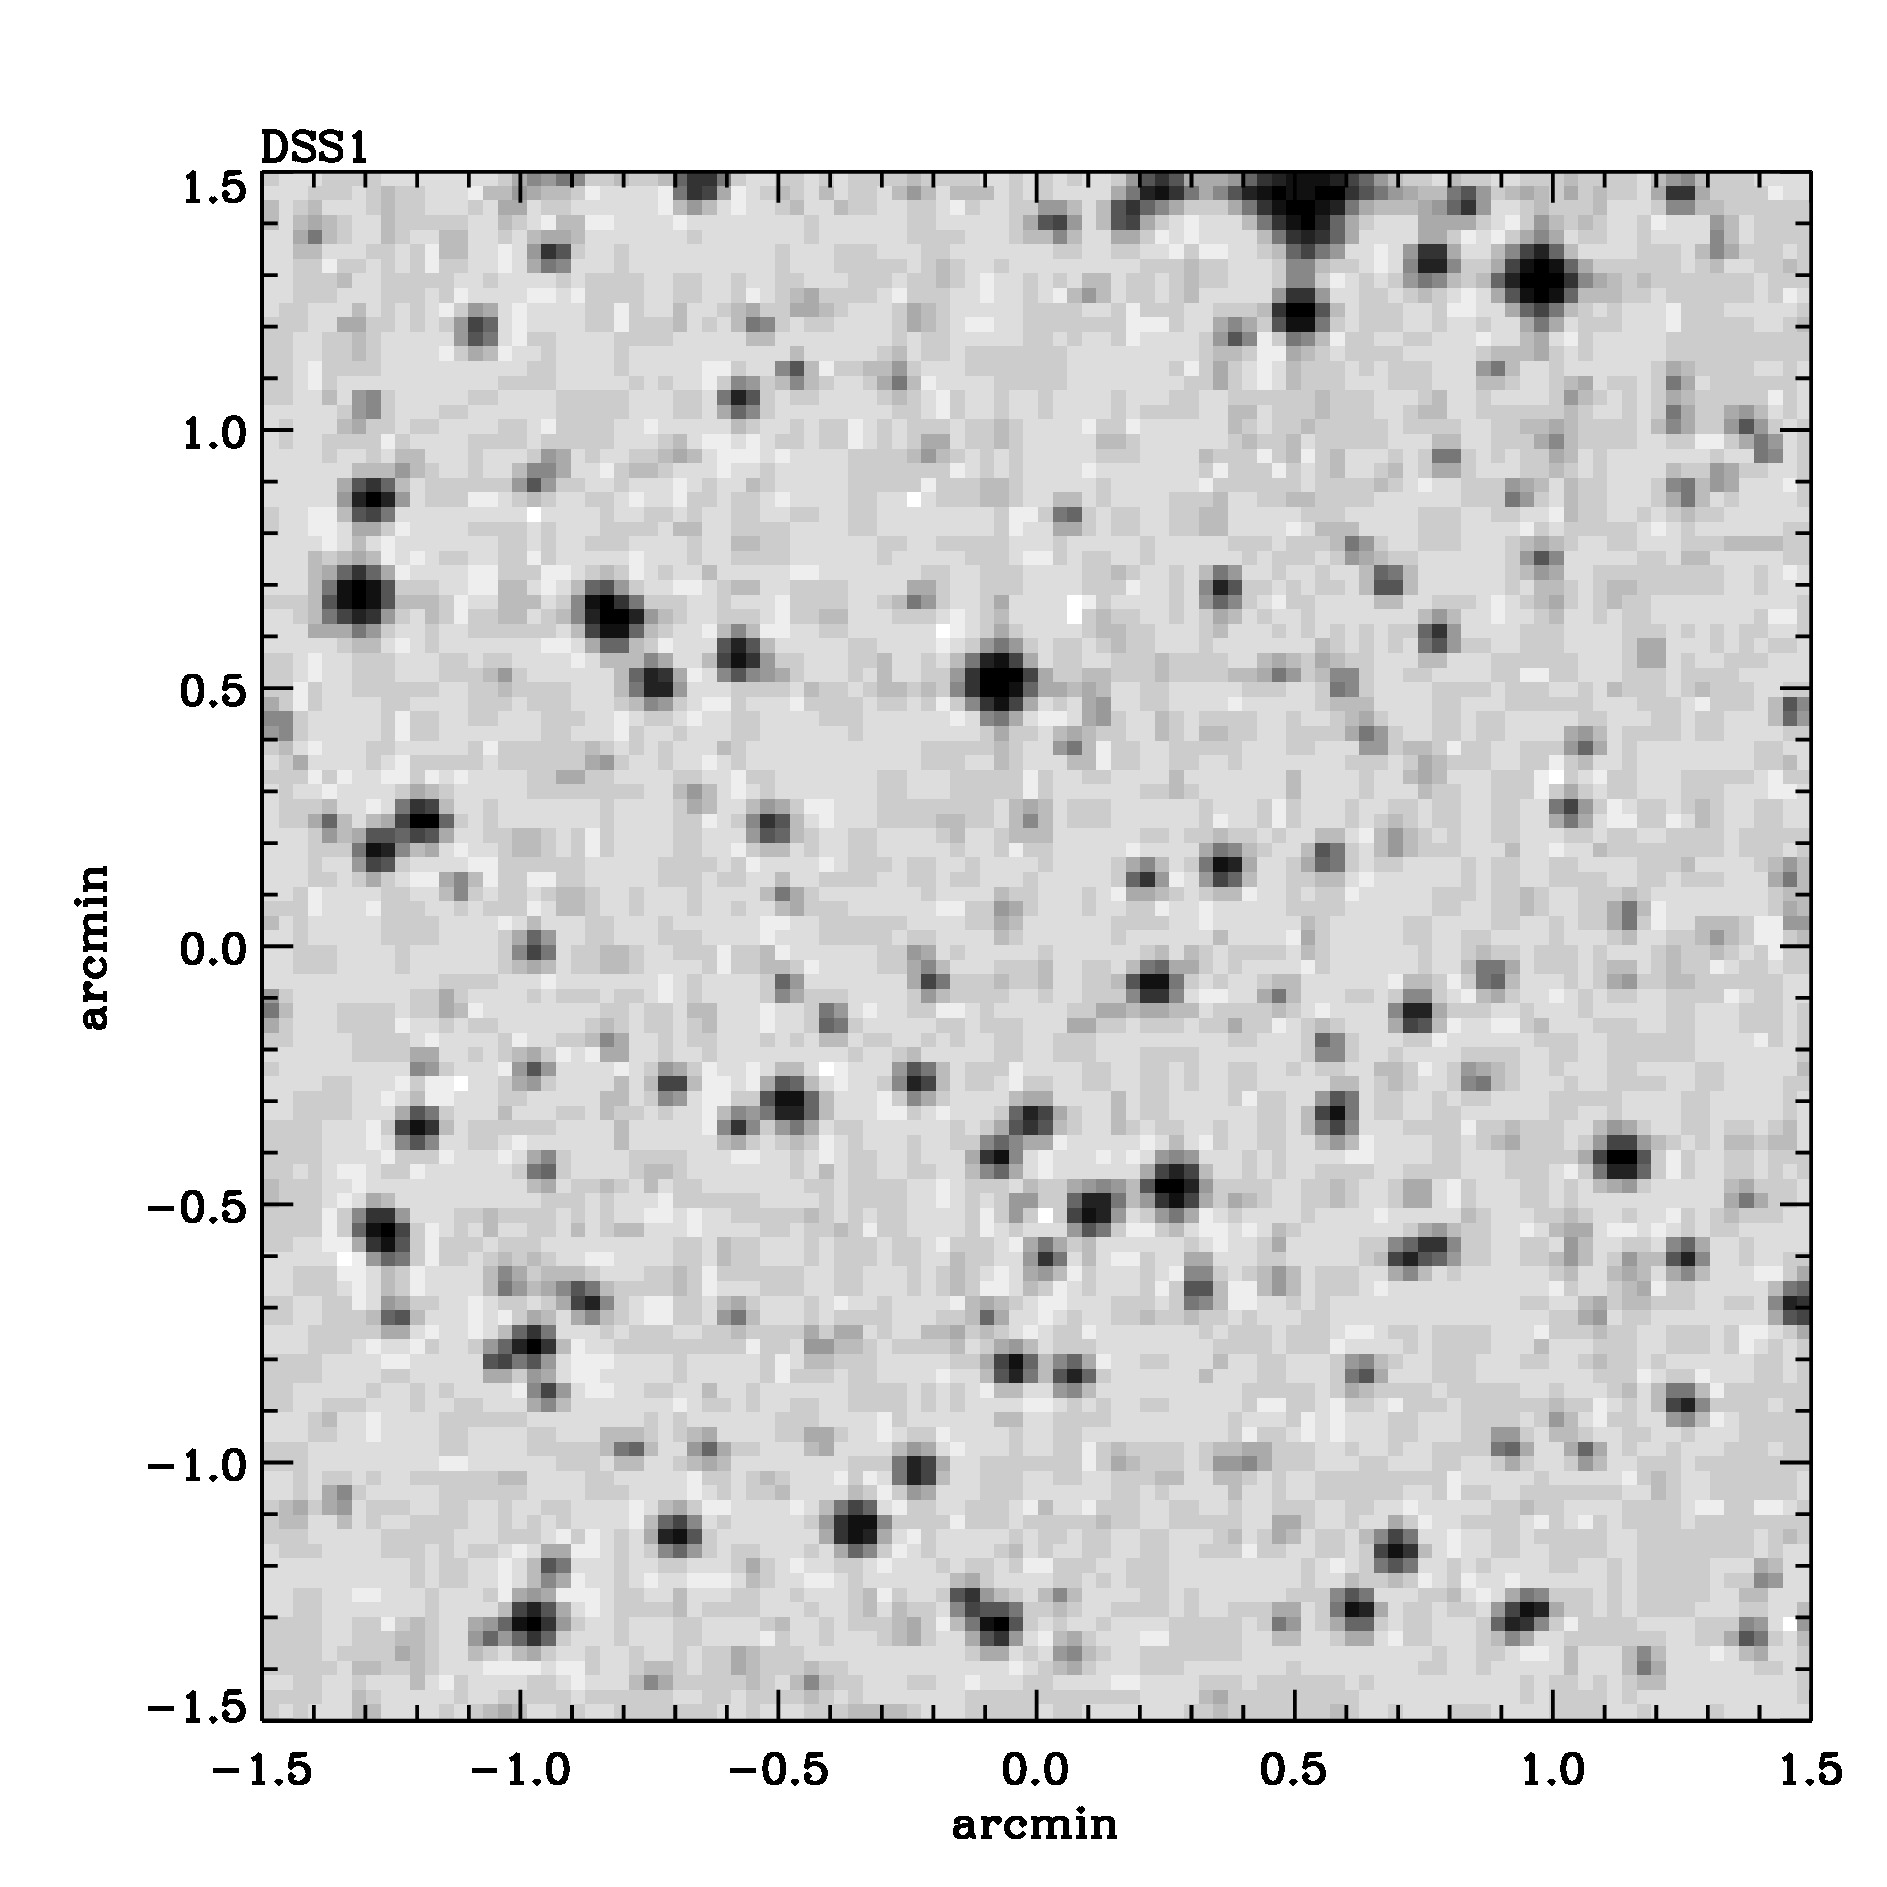 Optical image for SWIFT J1649.3-4351